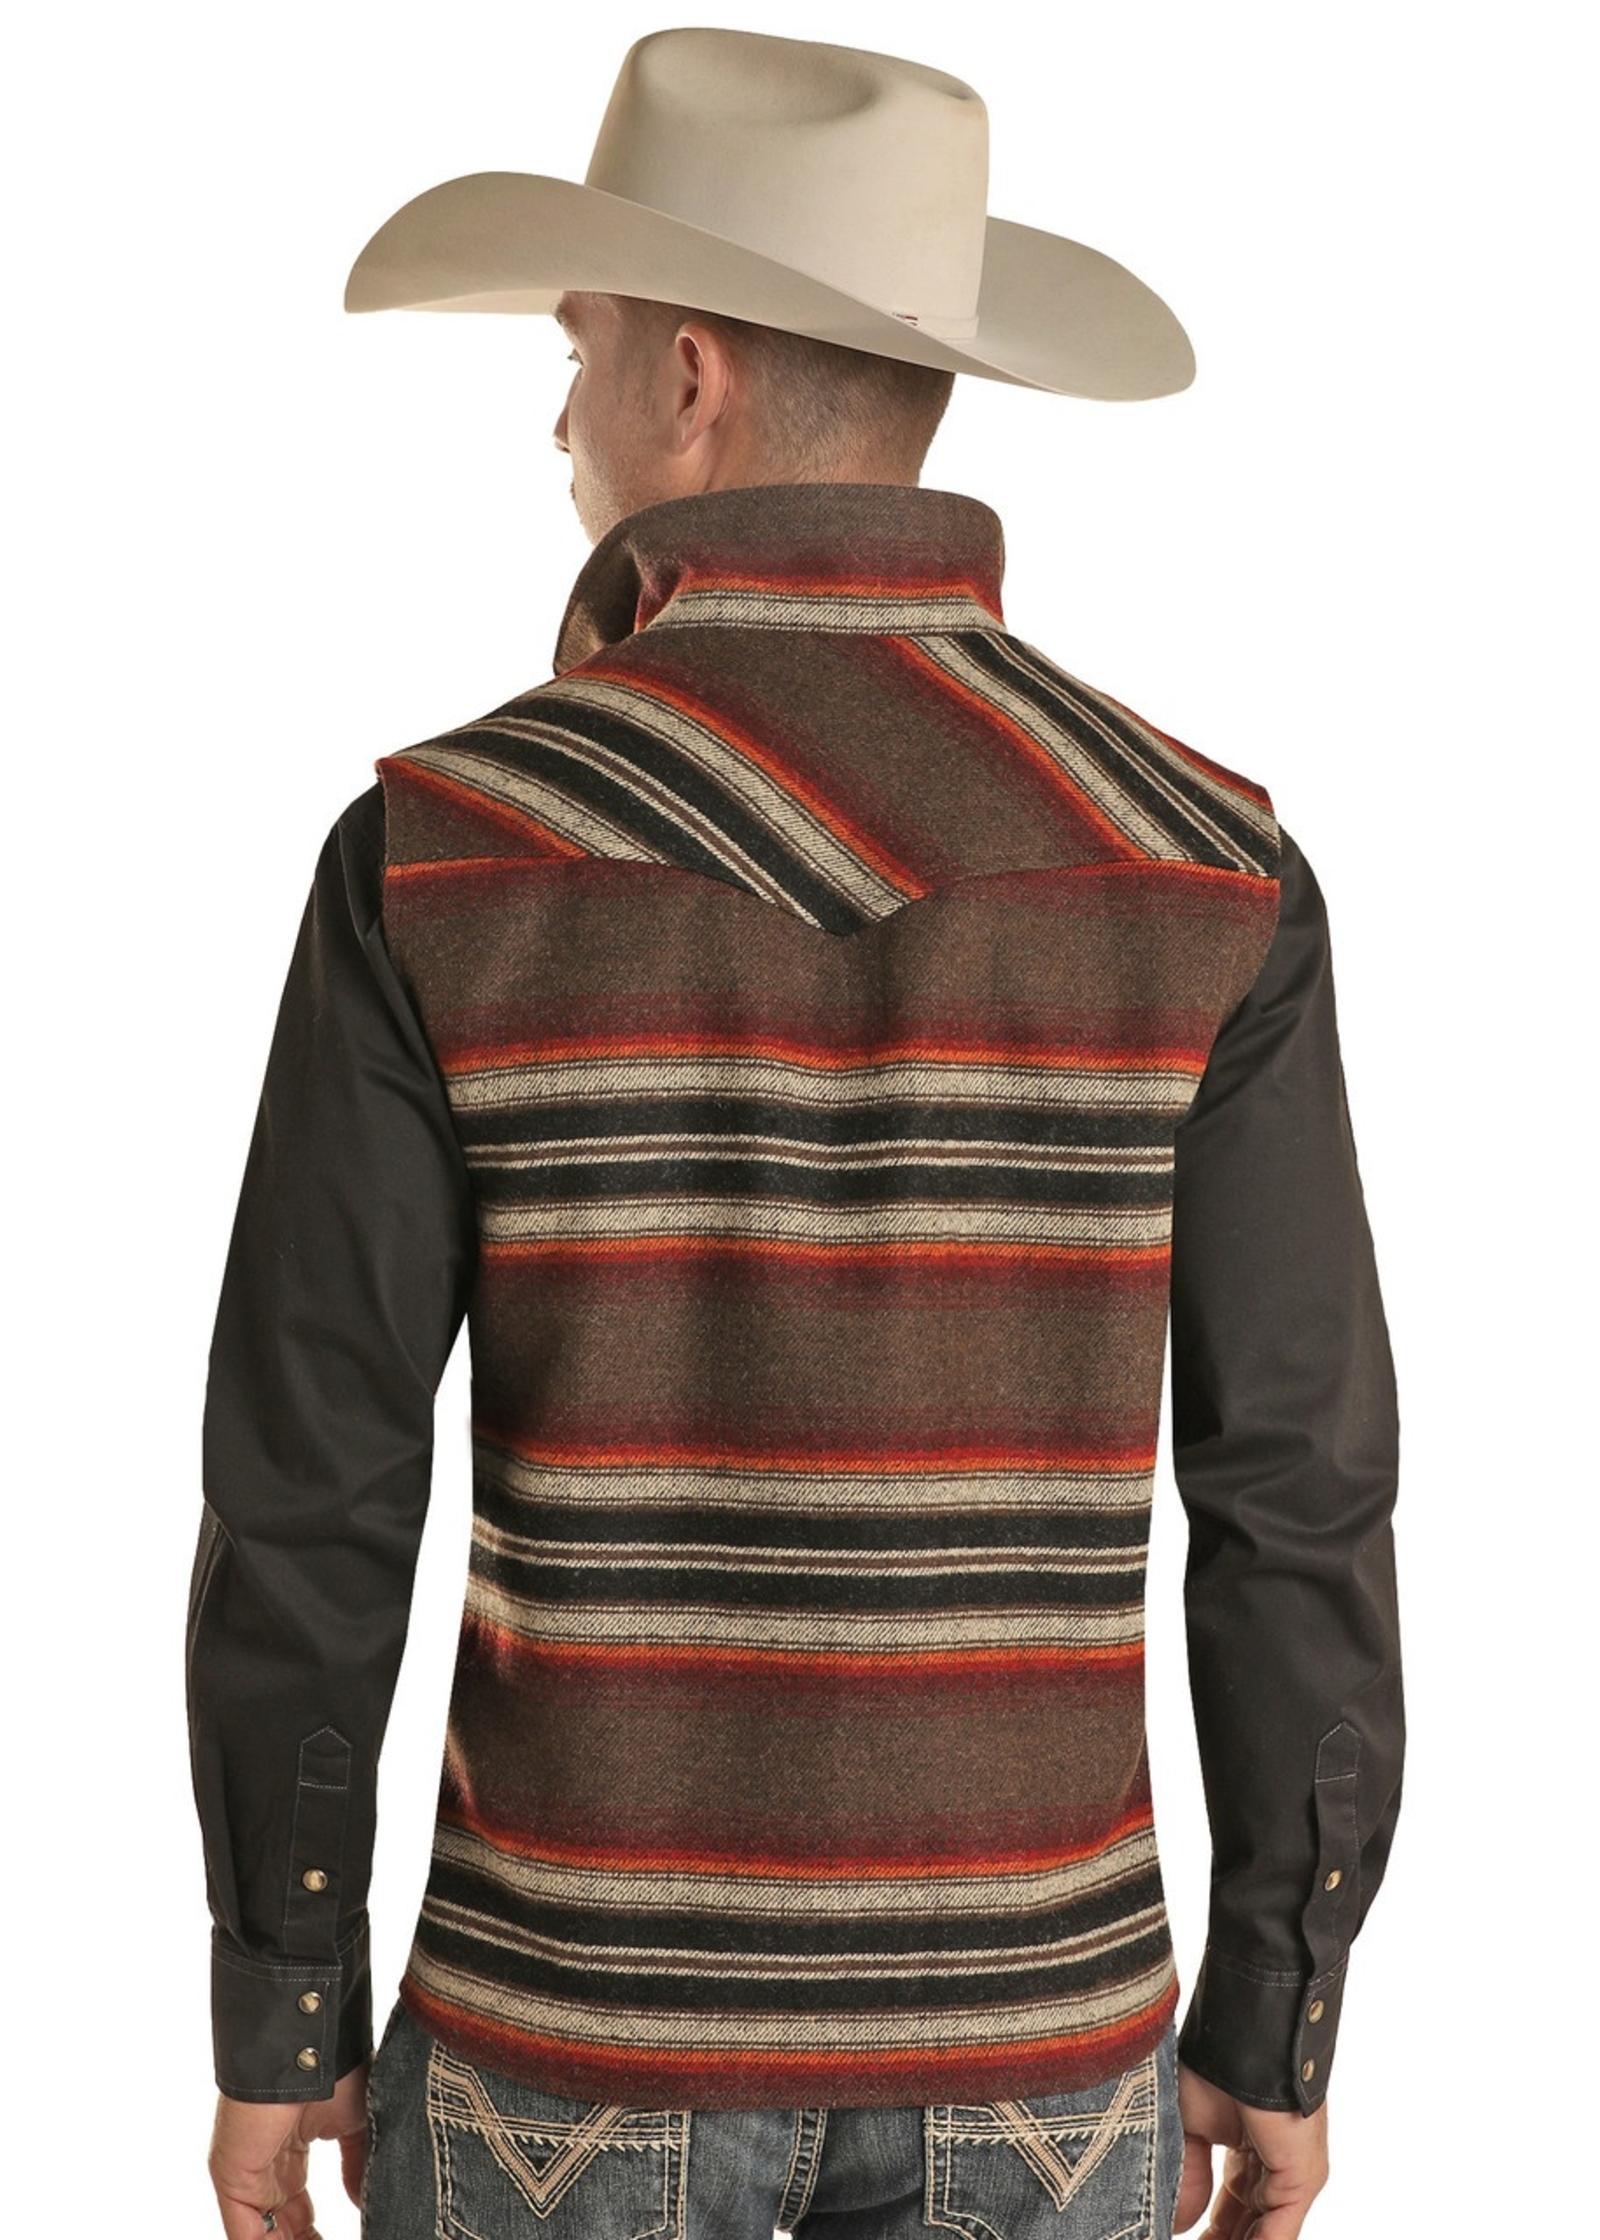 Powder River Striped Vest